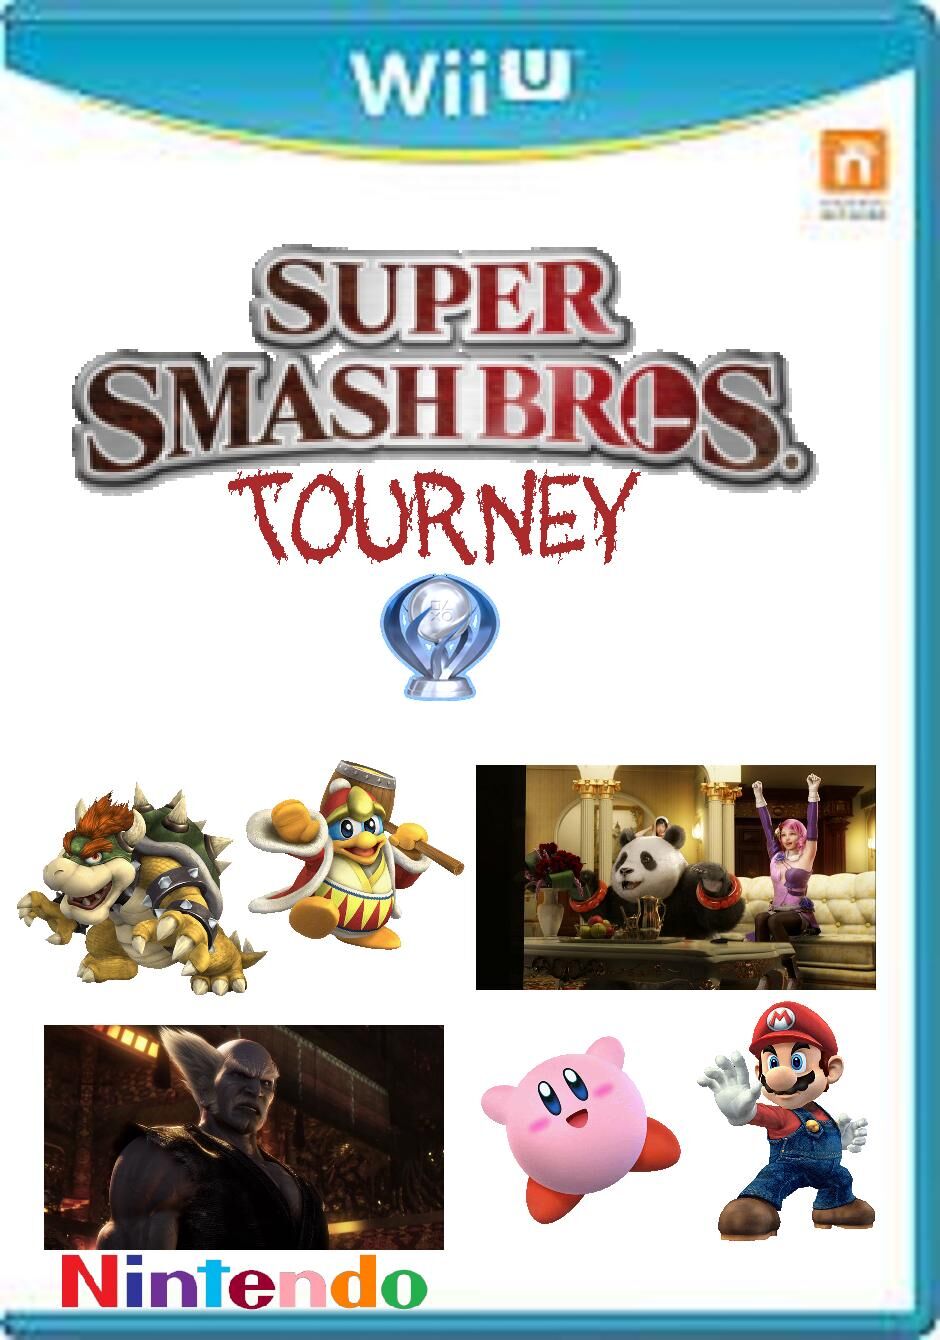 Leorio, Super Smash Bros. Tourney Wiki